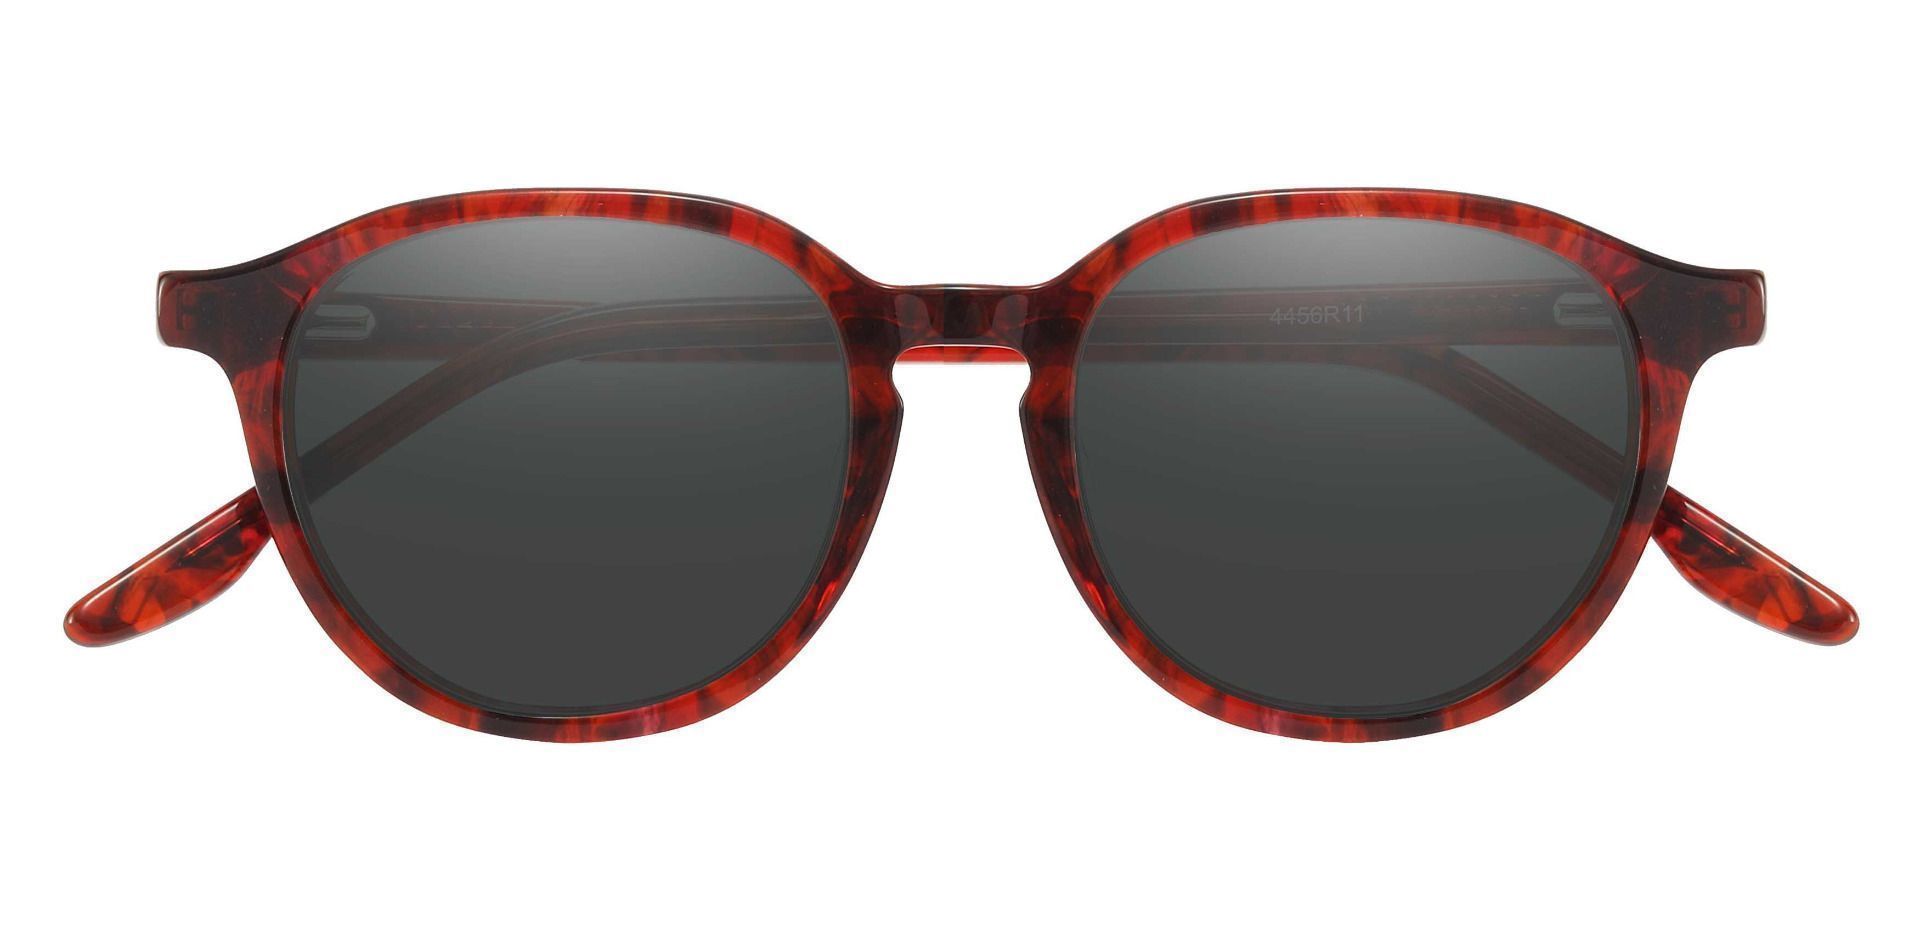 Ashley Oval Progressive Sunglasses - Red Frame With Gray Lenses